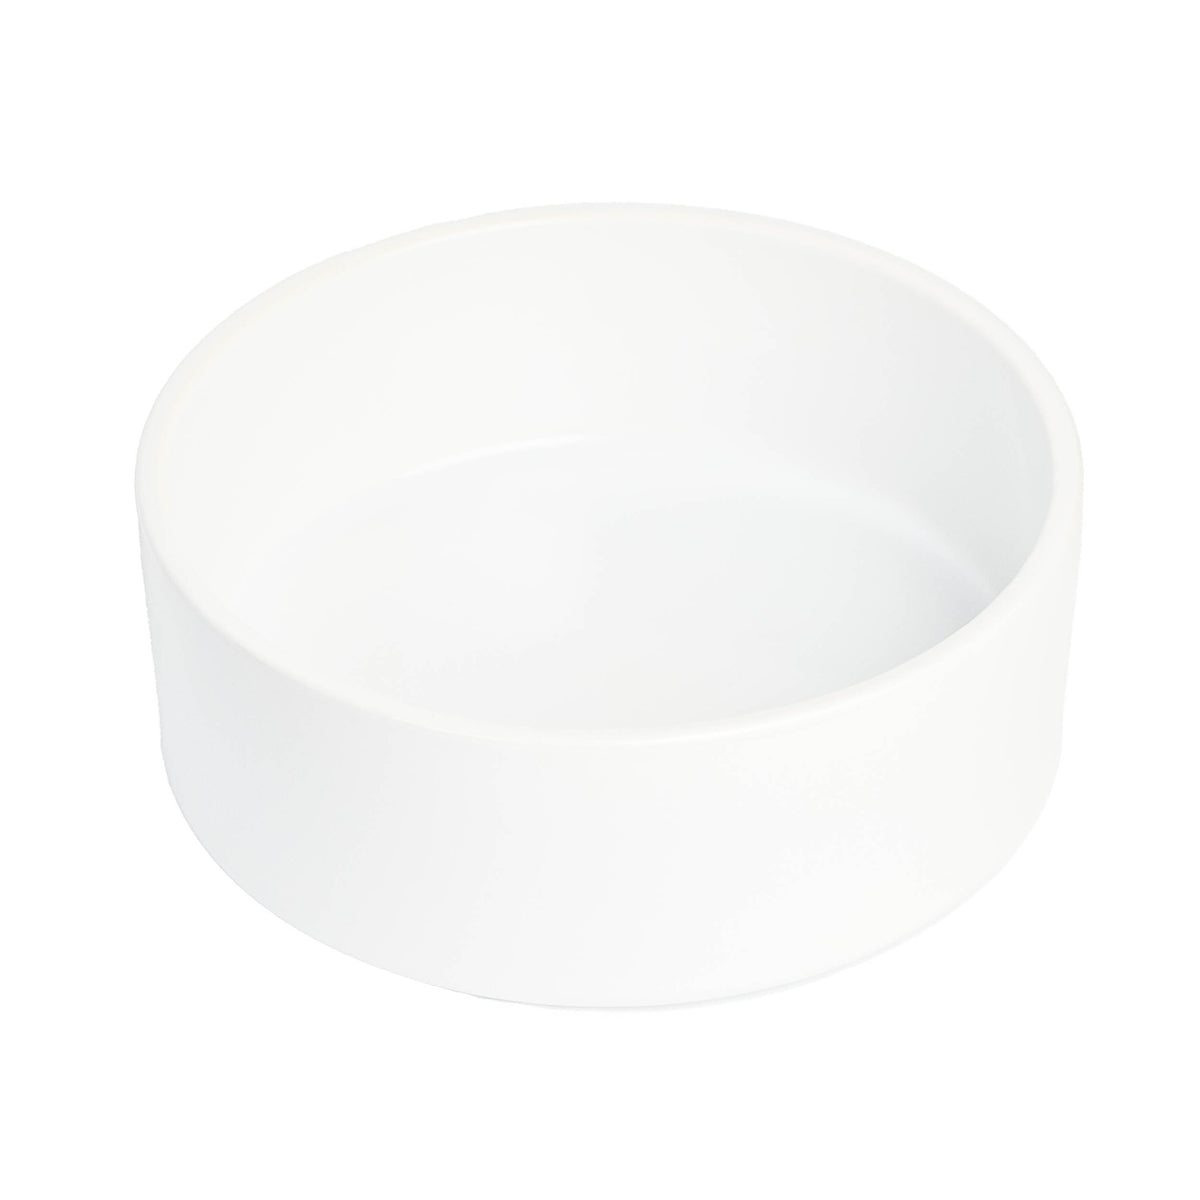 Personalised bowl for cats / ceramic - 22oz 650ml (design 7)